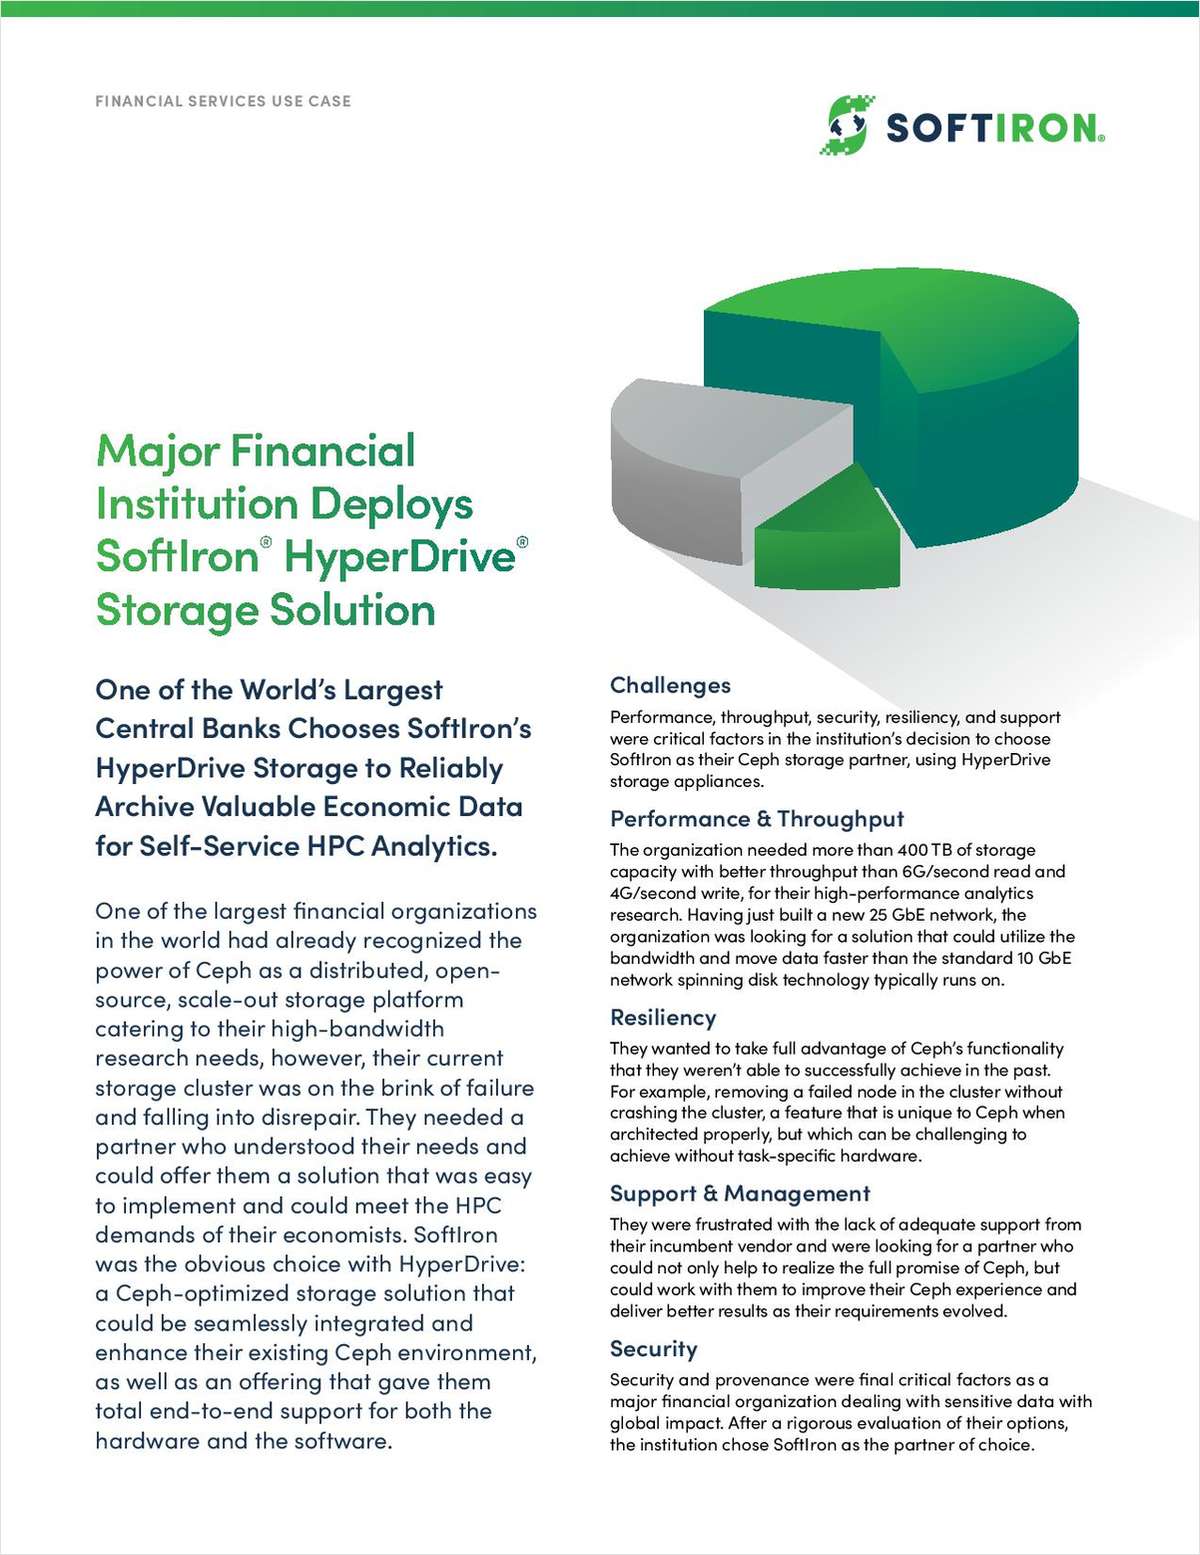 SoftIron for Financial Services